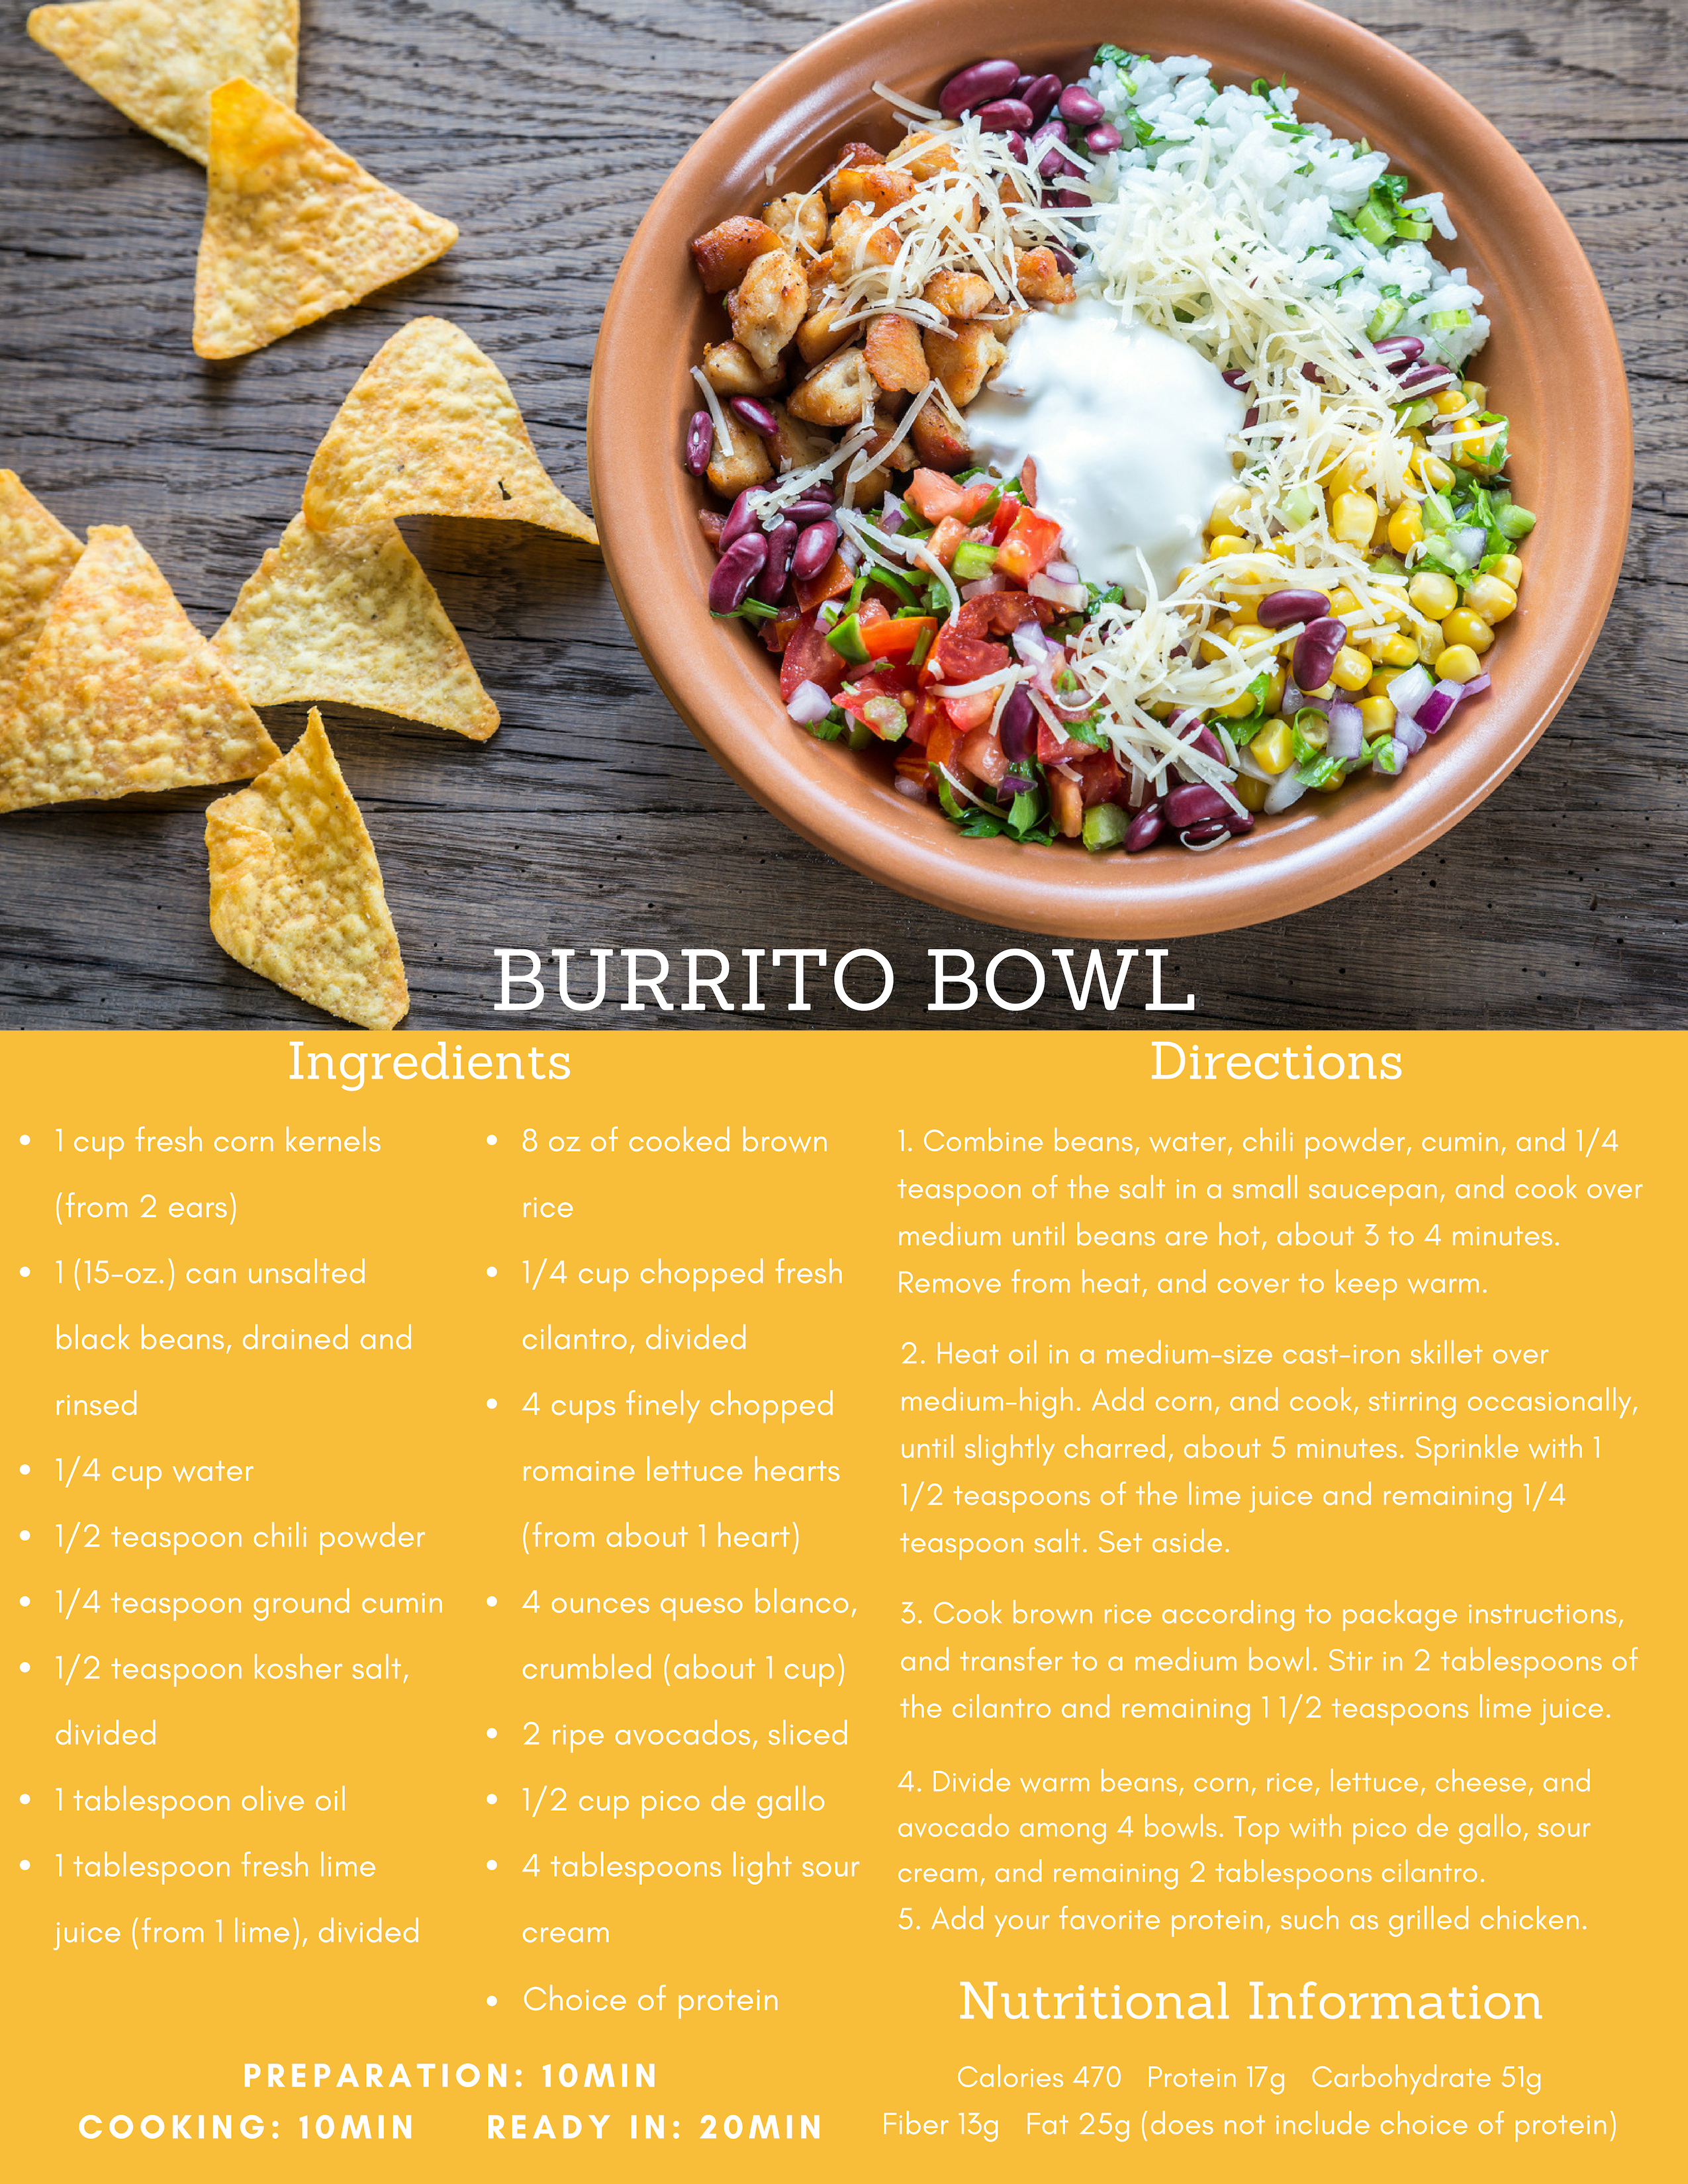 Burrito Bowl Blog post